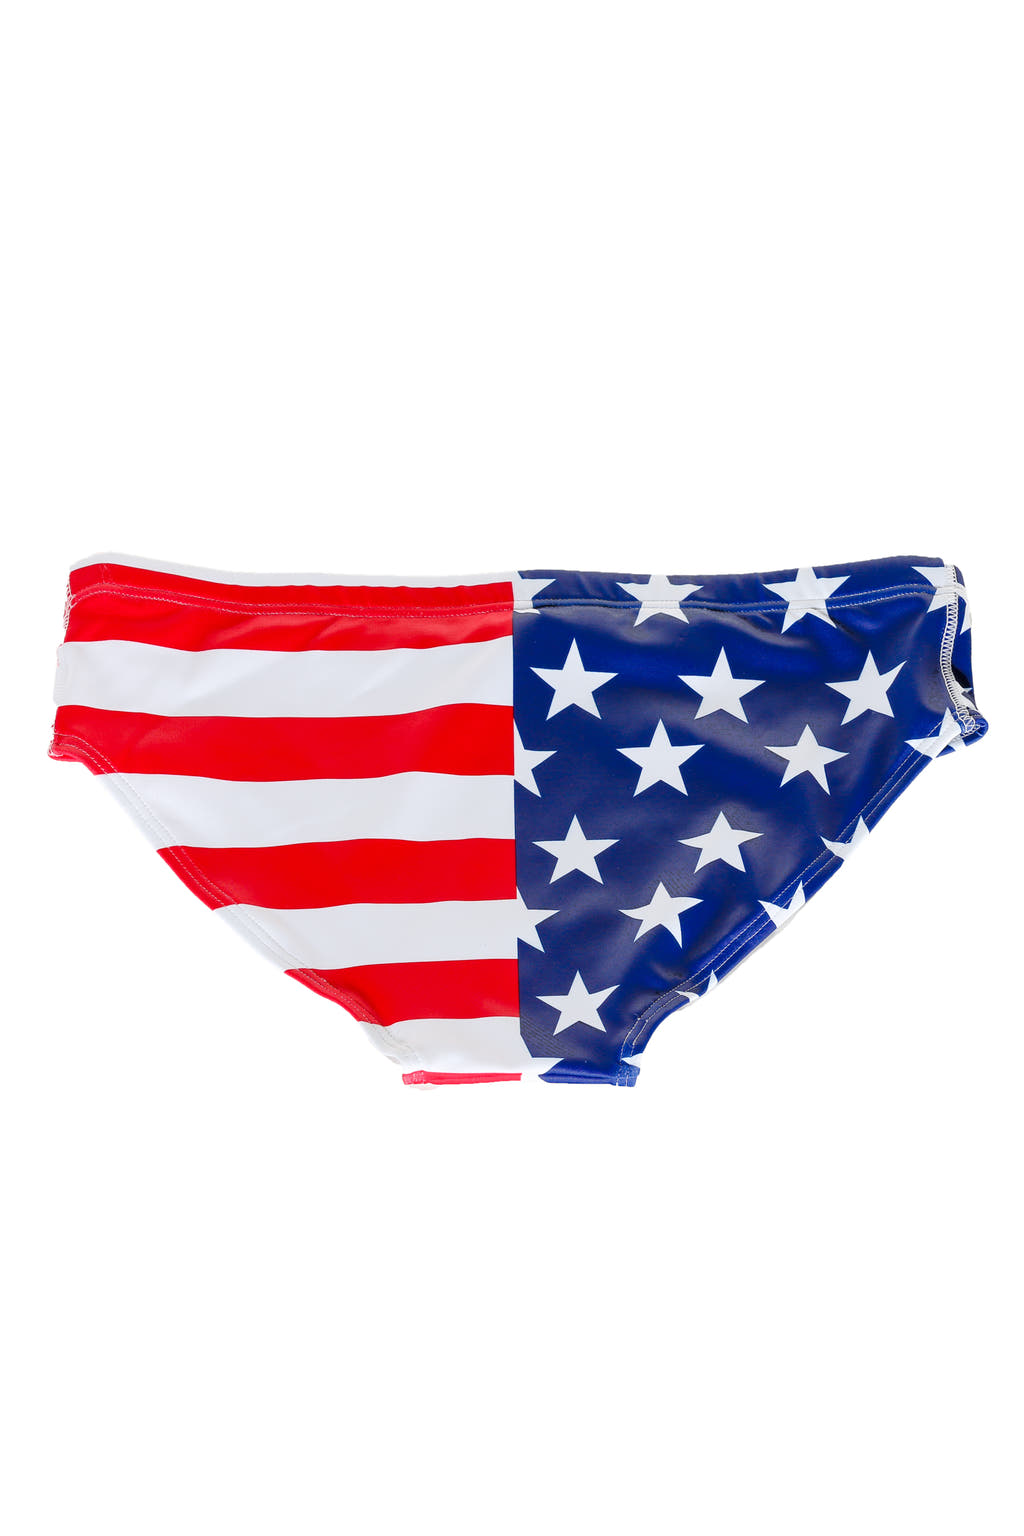 American flag swim brief